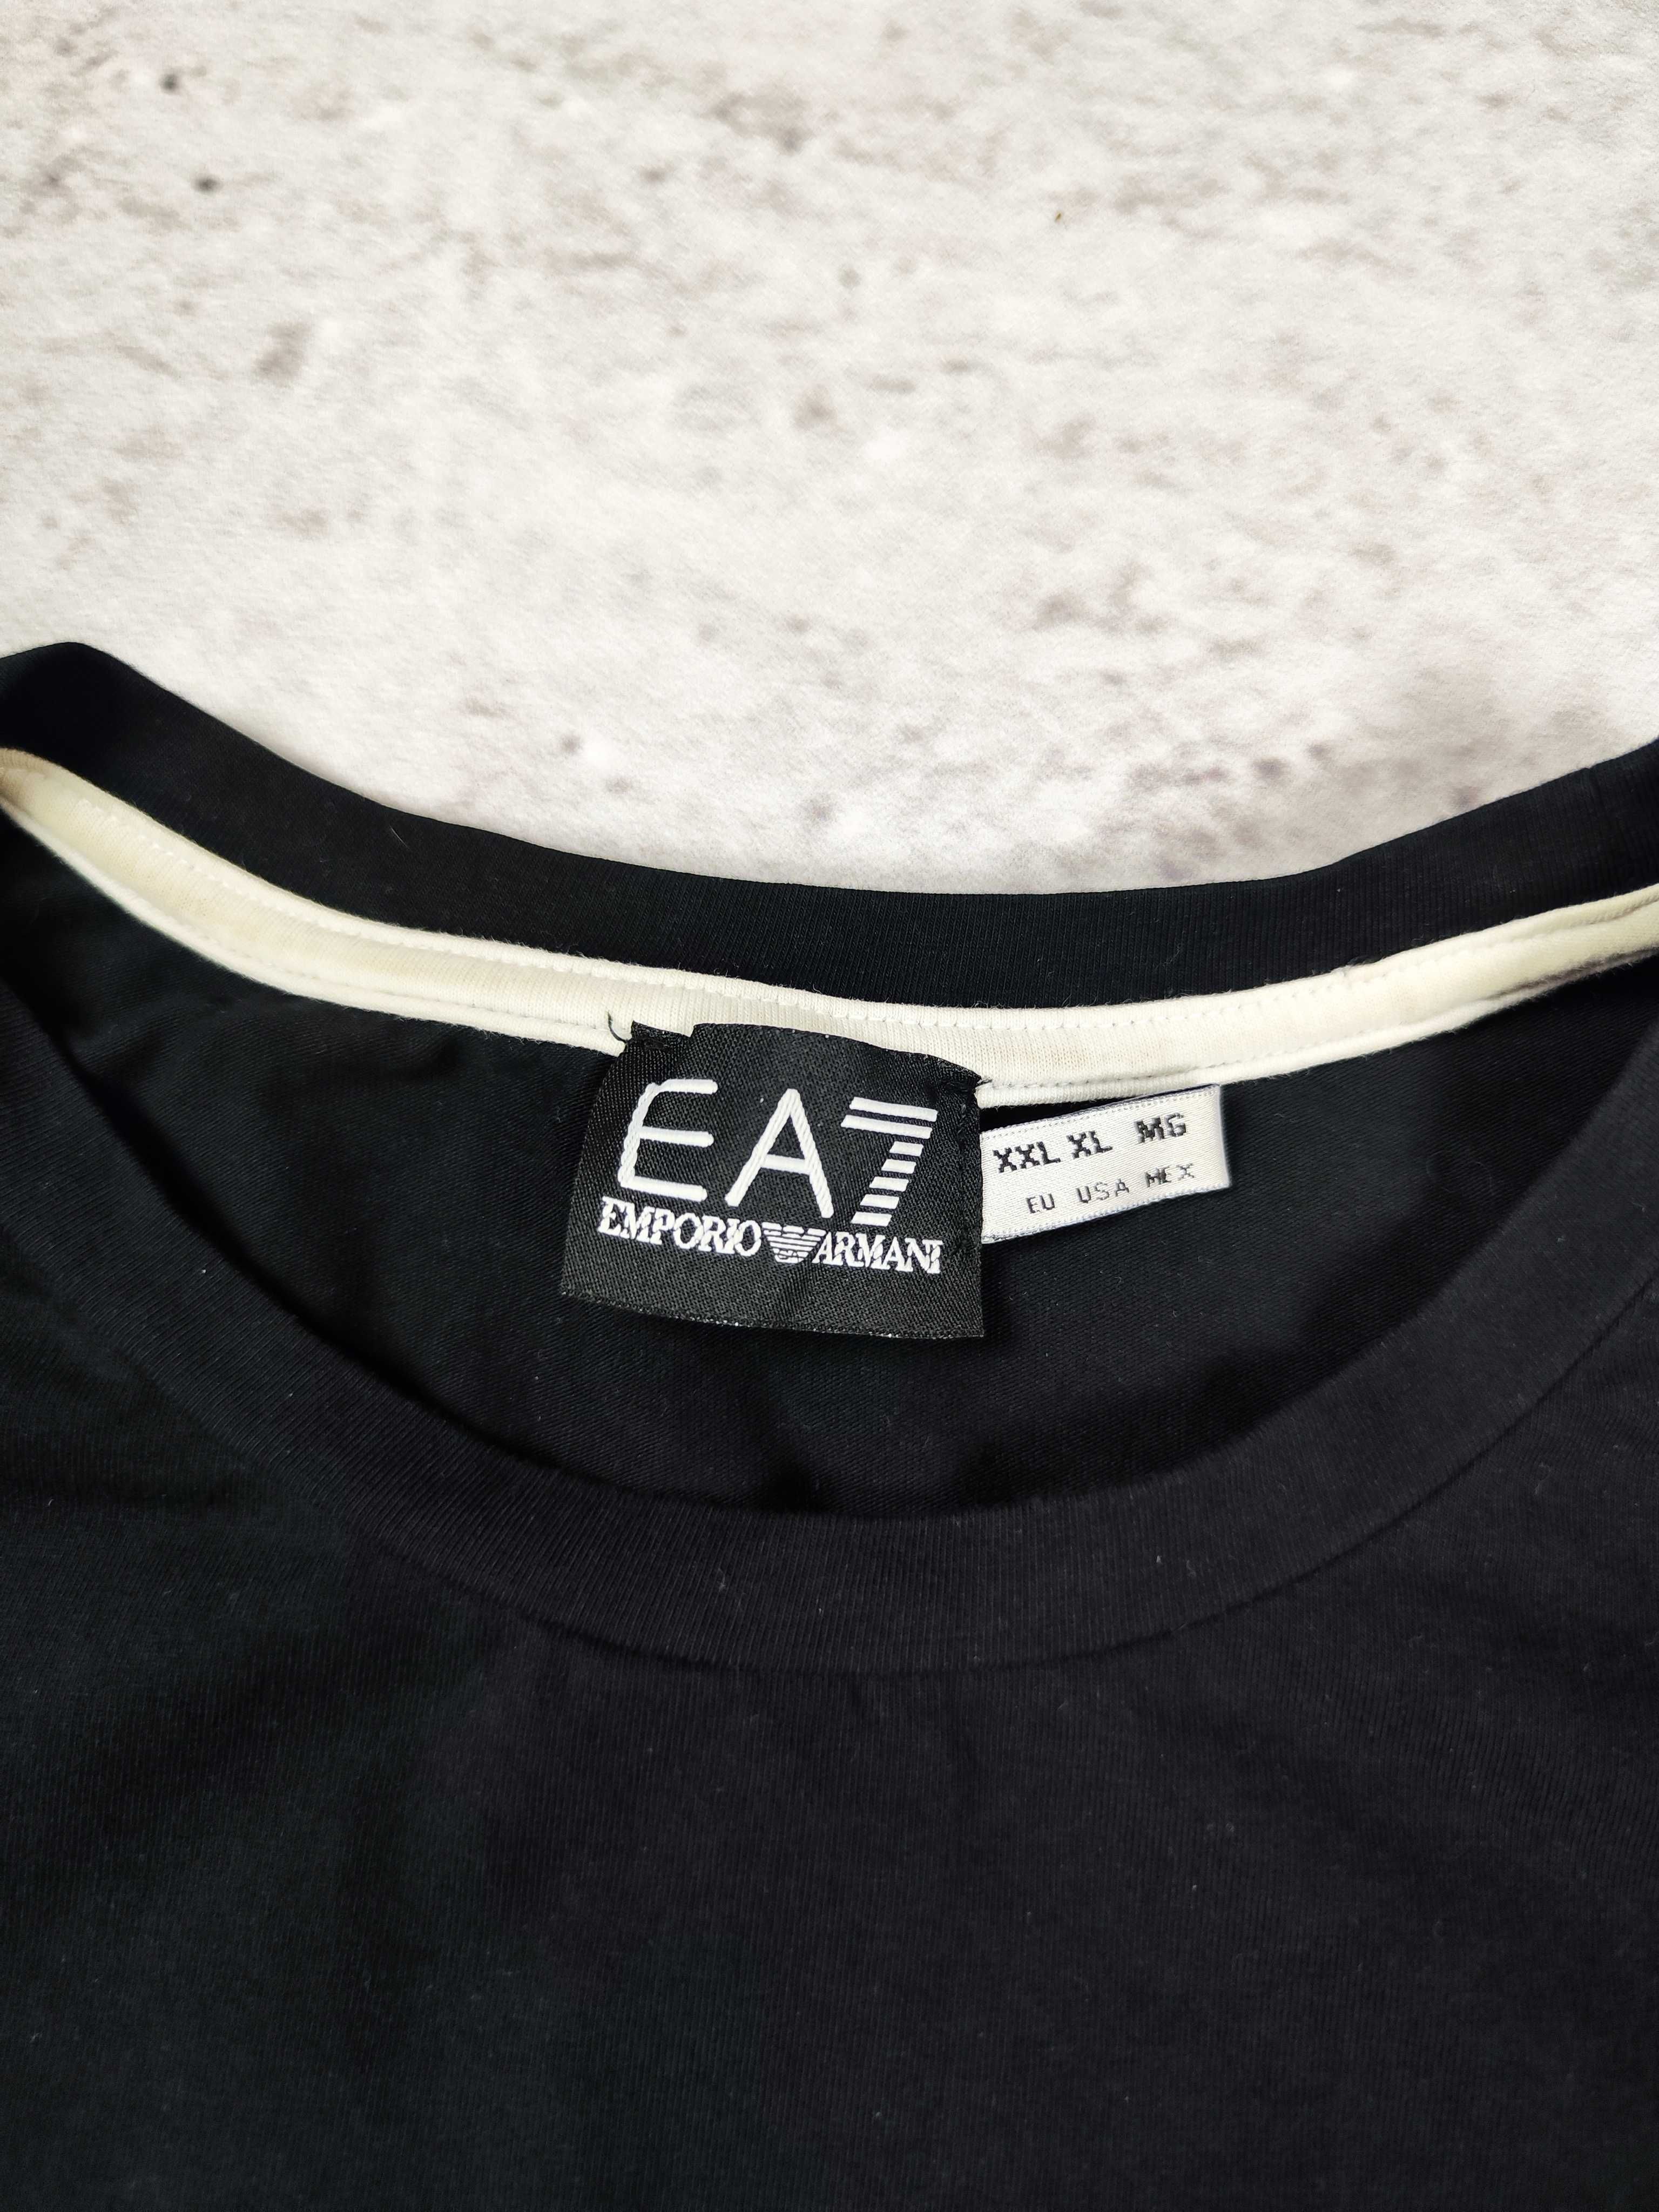 Koszulka Emporio Armani EA7 T-SHIRT czarna basic męska r. XL